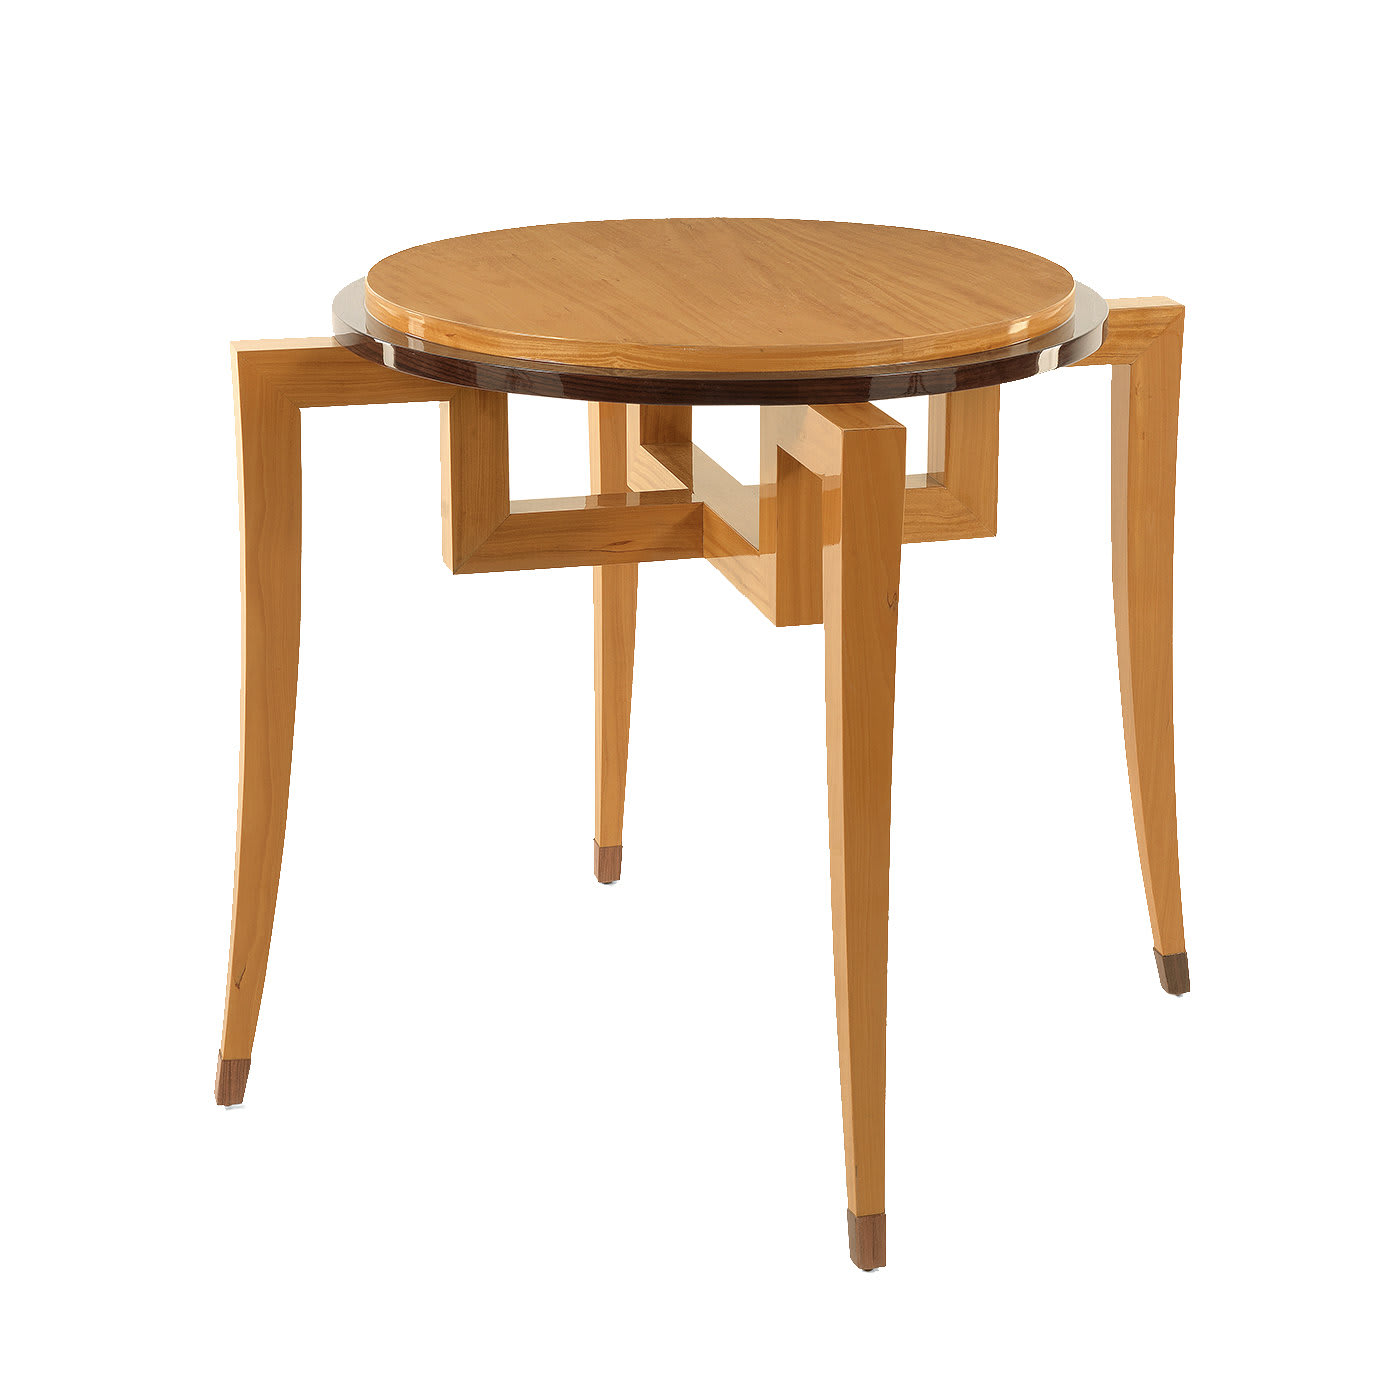 Citronnier Wood Round Table - Tagliabue